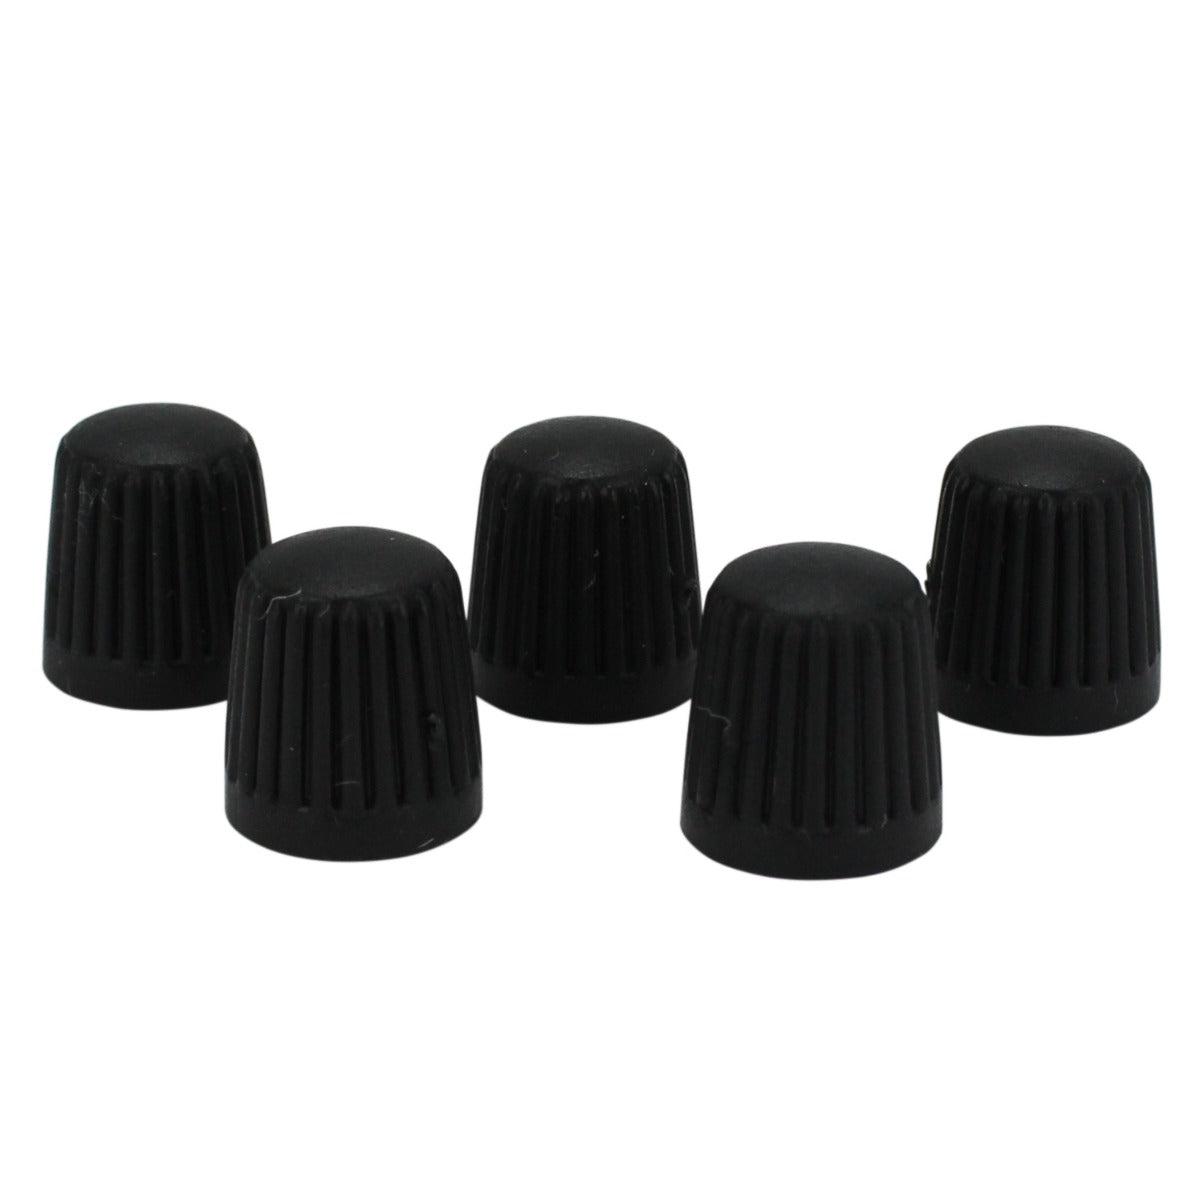 TR VC 8 Dome Type Tire Valve Cap, 5 Caps, Plastic, Black (Single Retail Pack of 5 Caps)